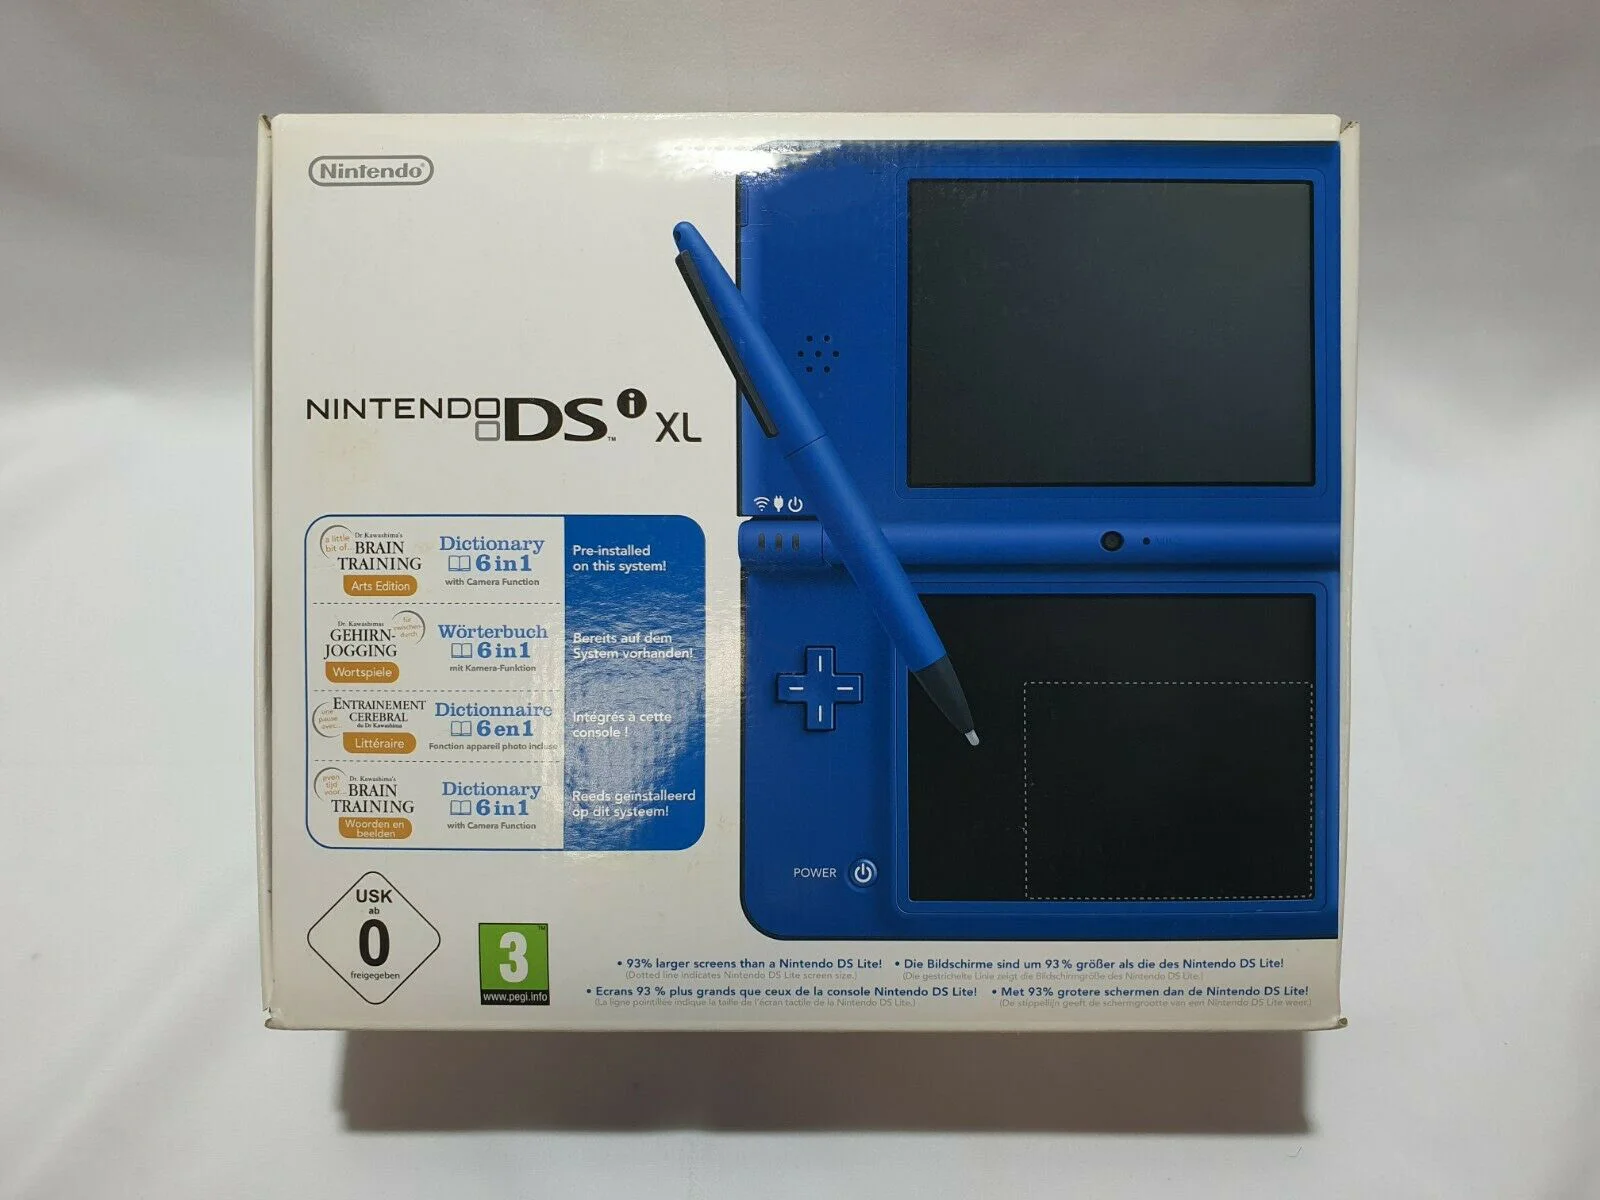  Nintendo DSi XL Midnight Blue Console [EU]